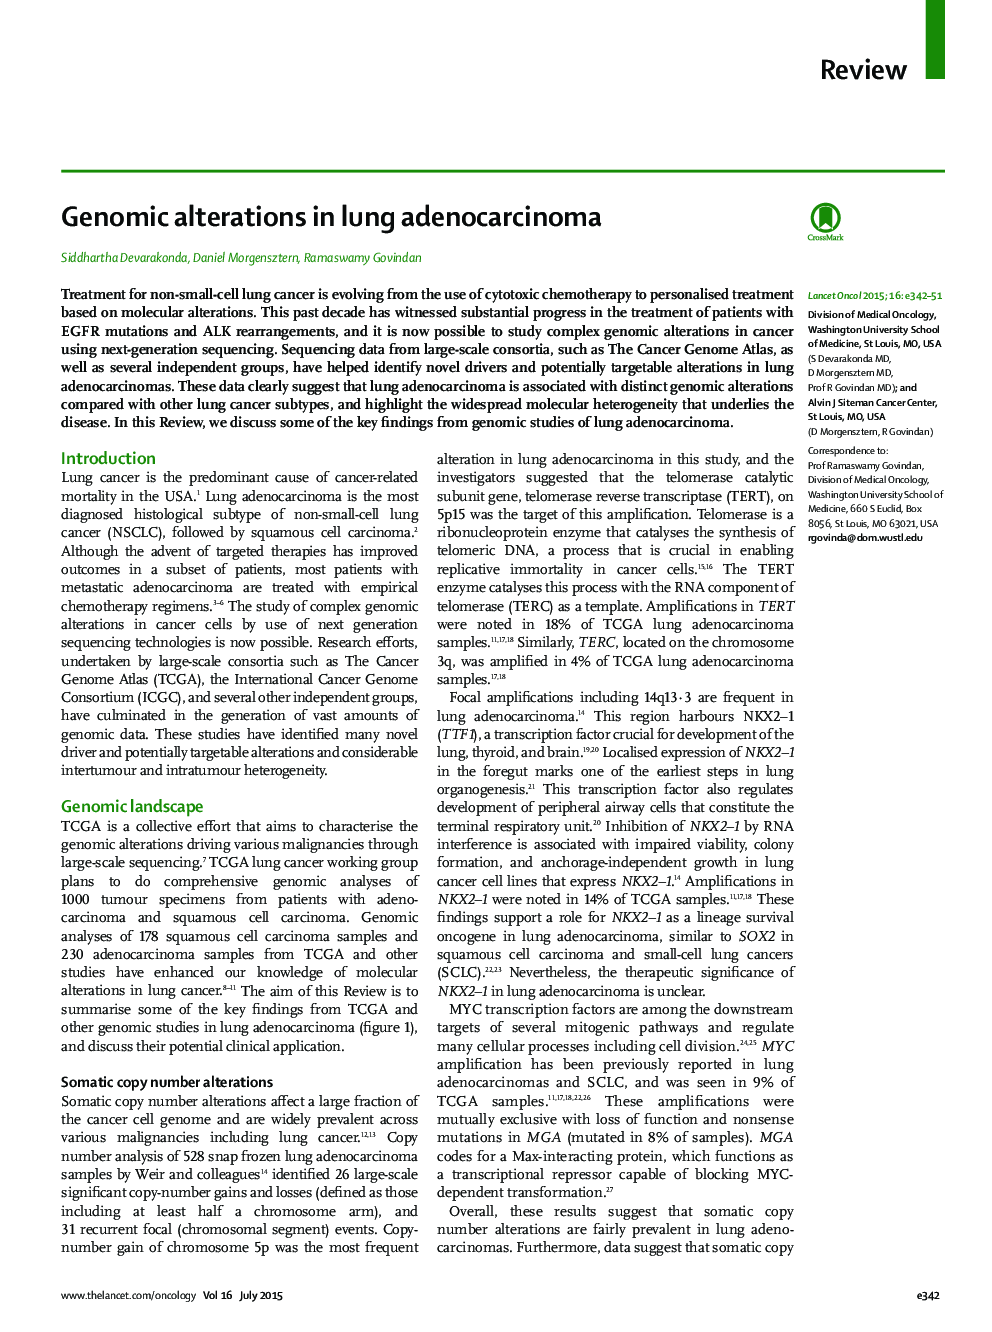 Genomic alterations in lung adenocarcinoma